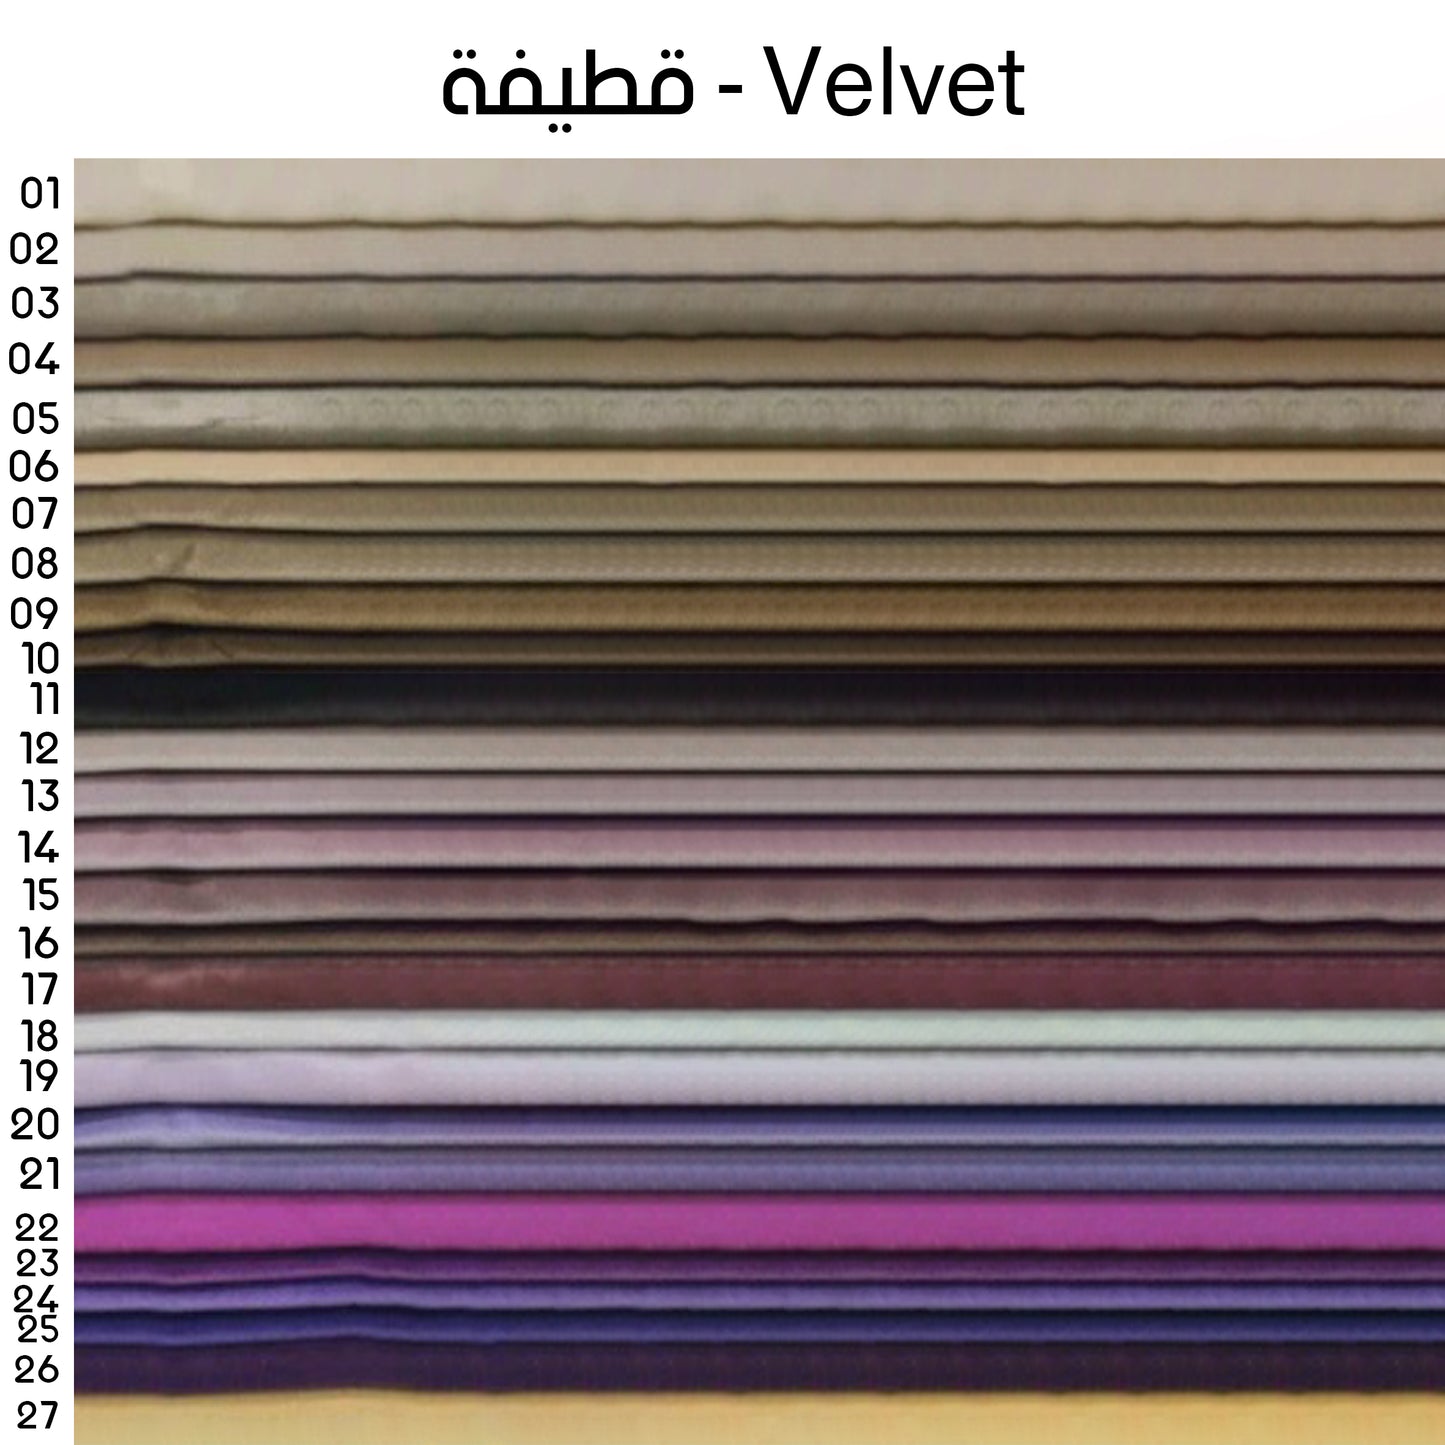 L Corner - Assorted colors - 120 x 250 cm - FUD22